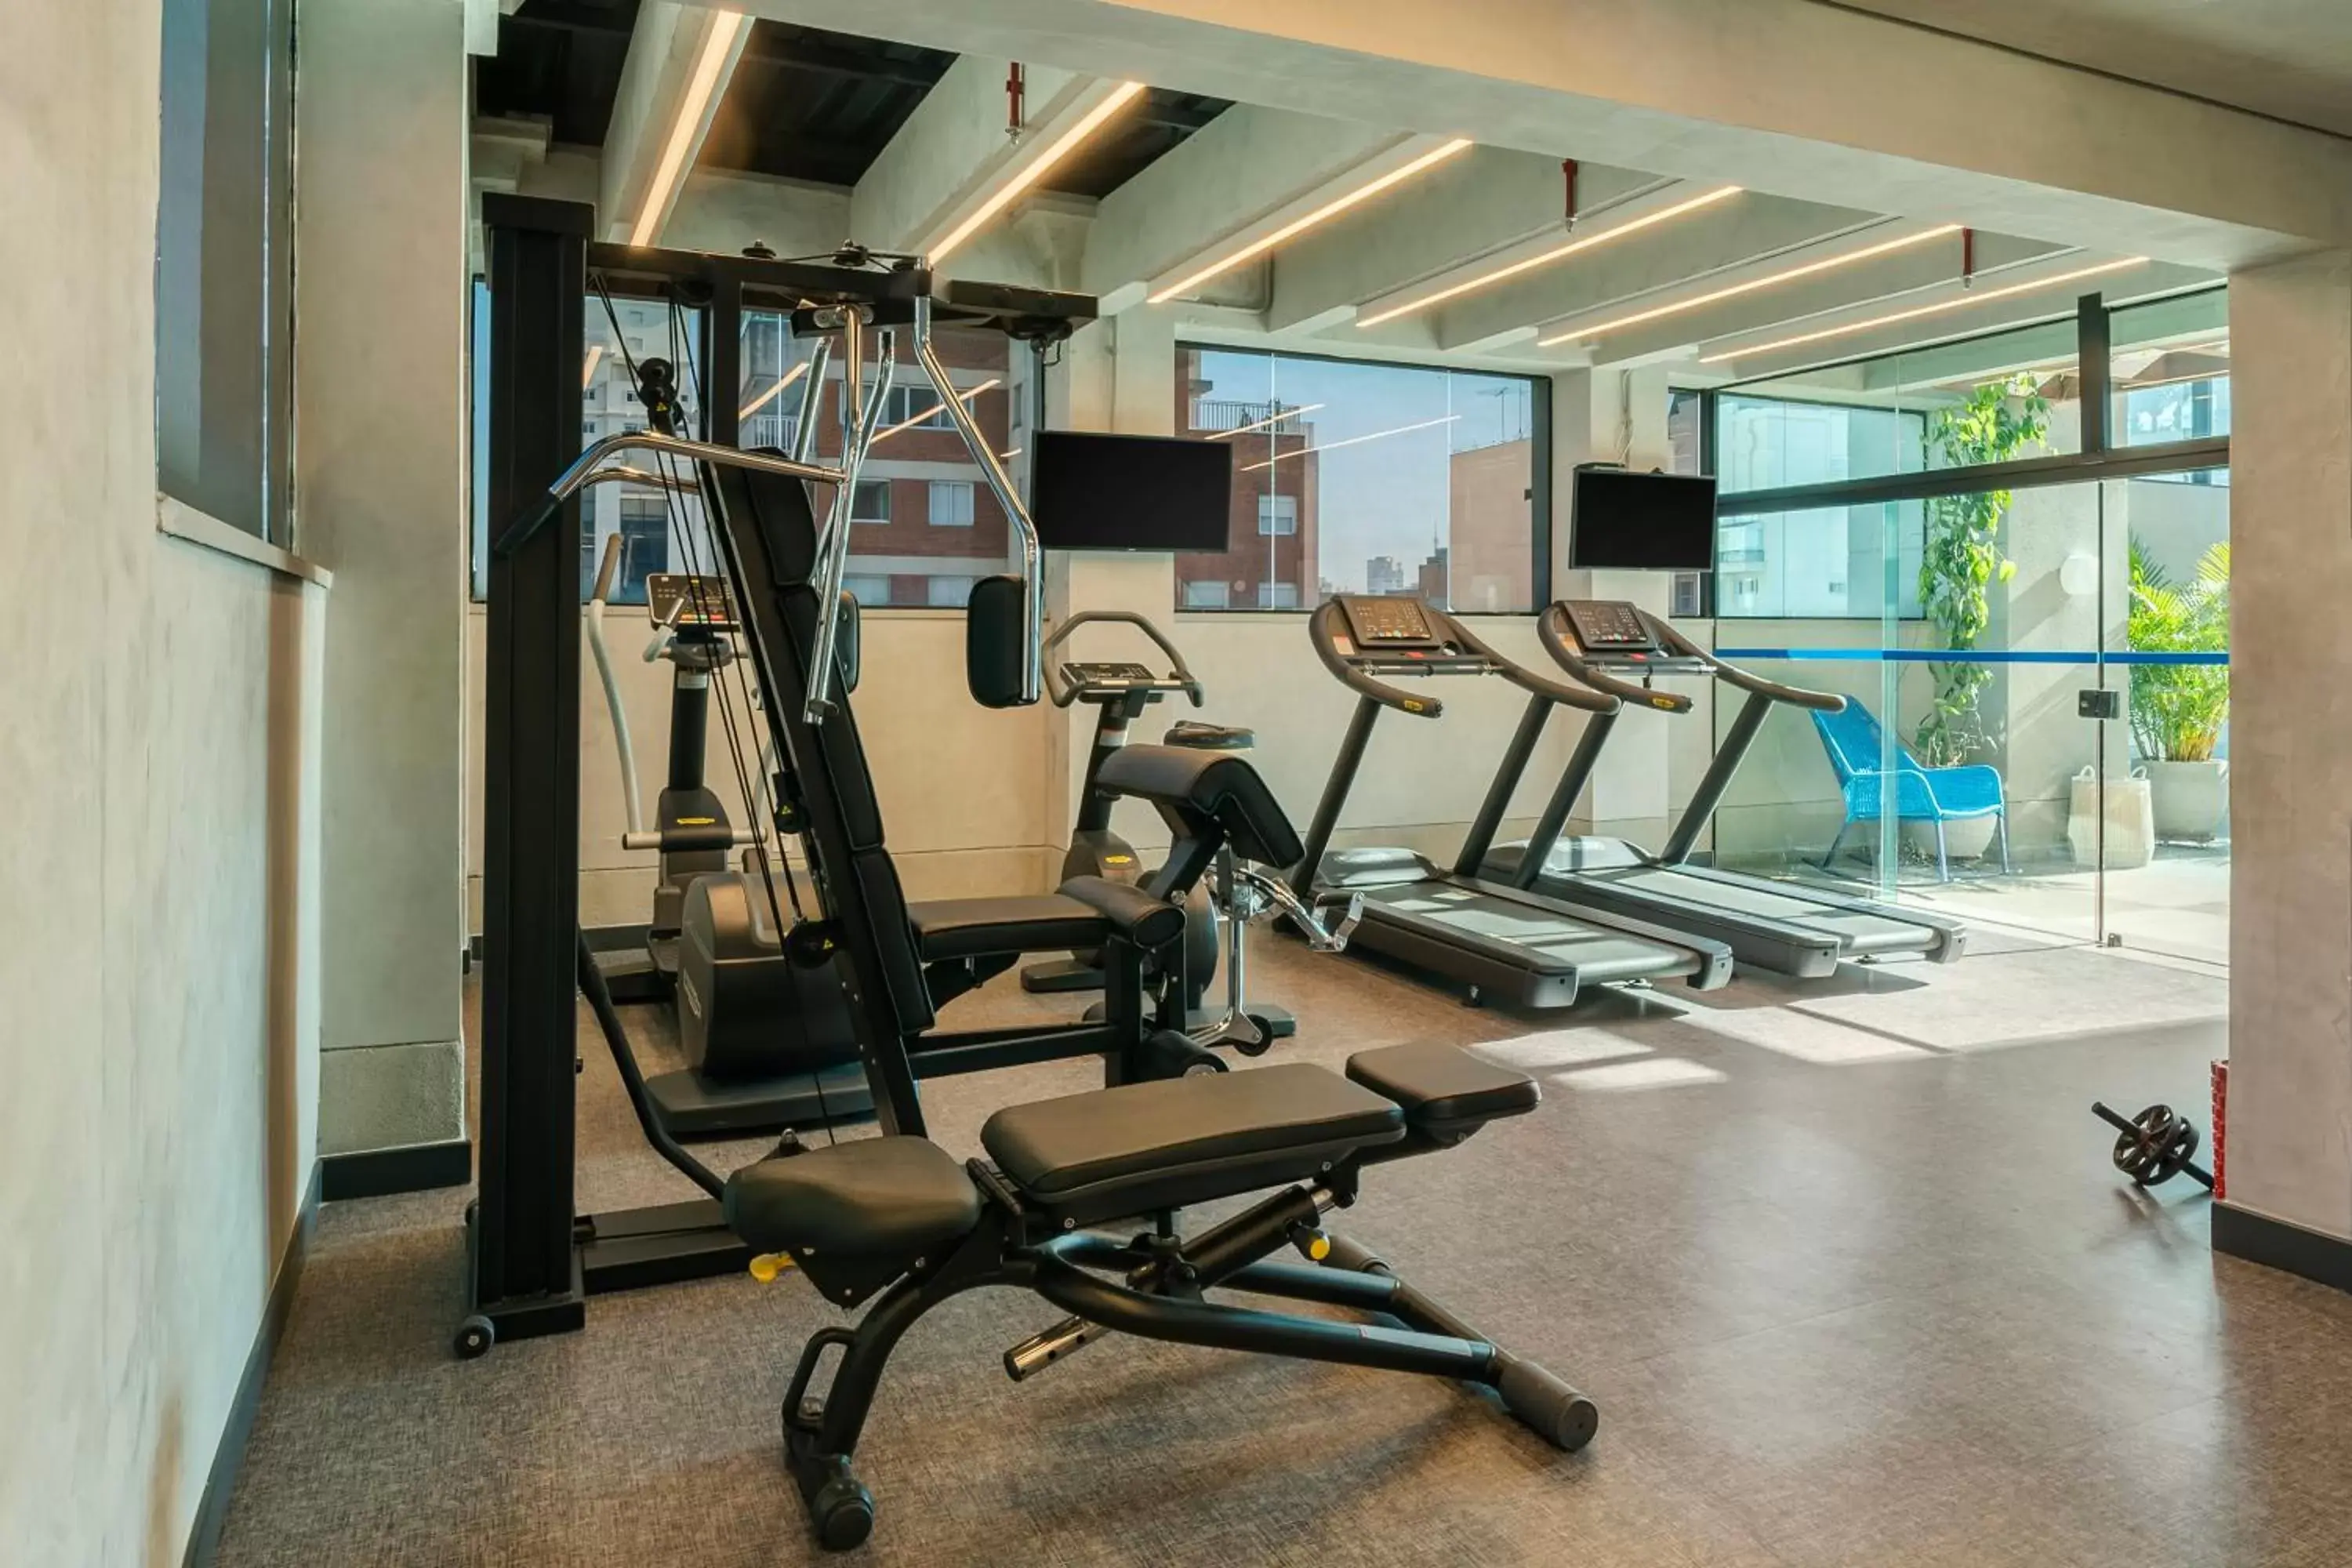 Fitness centre/facilities, Fitness Center/Facilities in Novotel SP Jardins